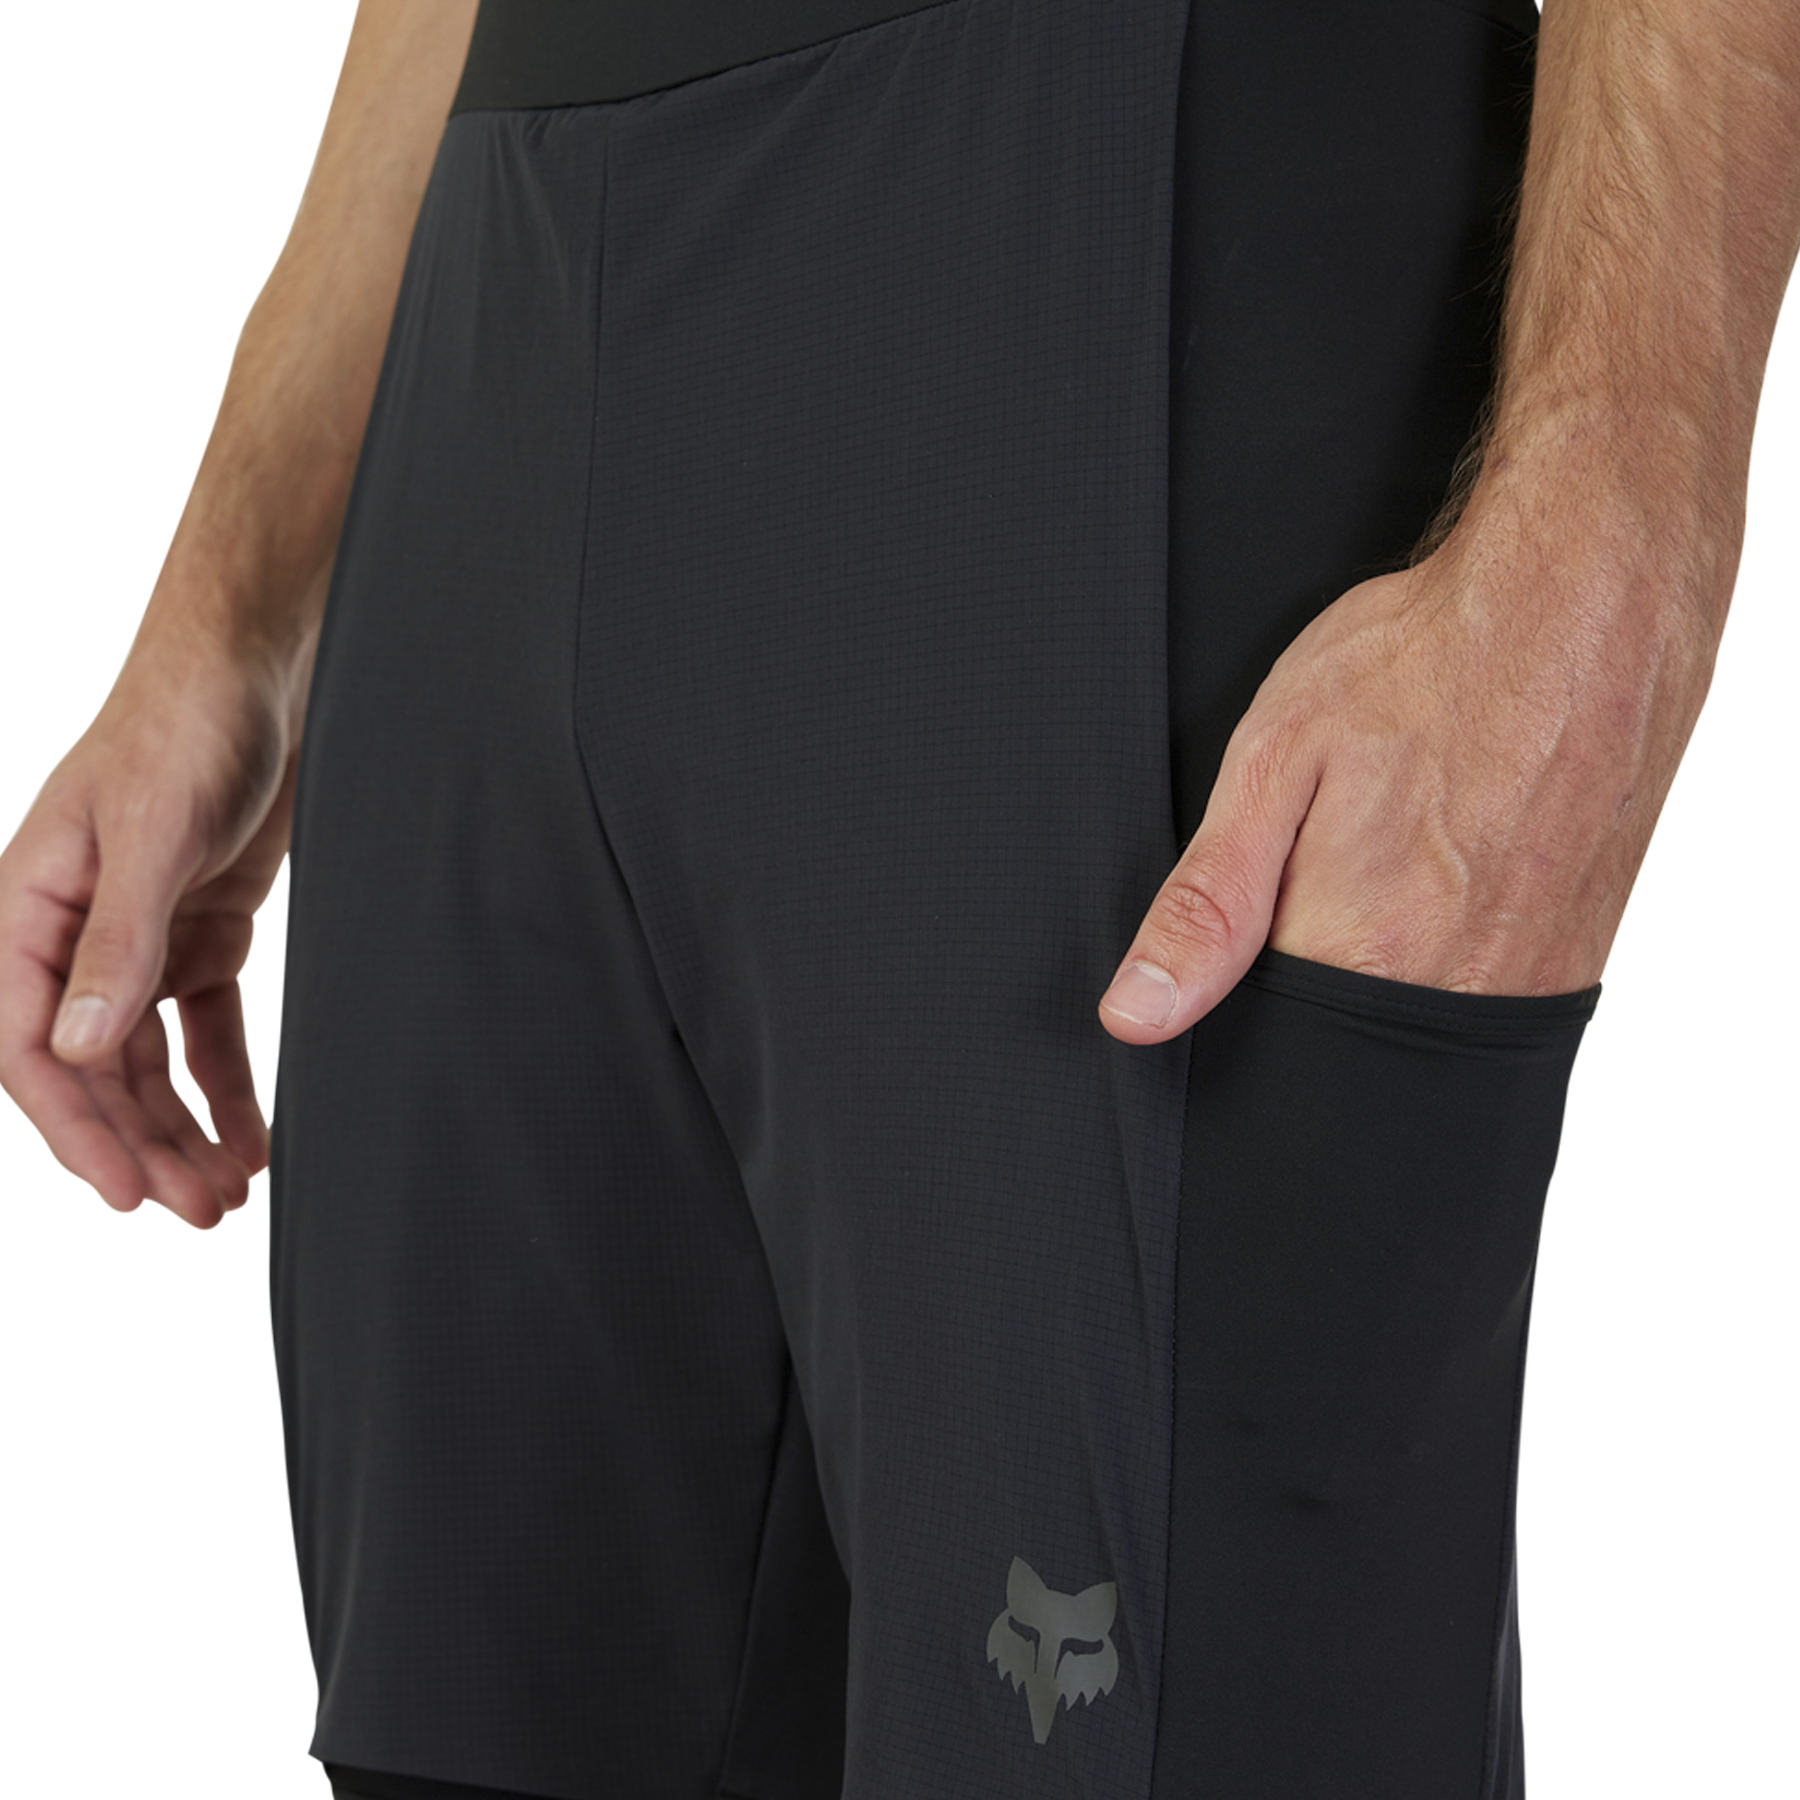 Fox Flexair Ascent Bib Shorts - M - Black - Image 3